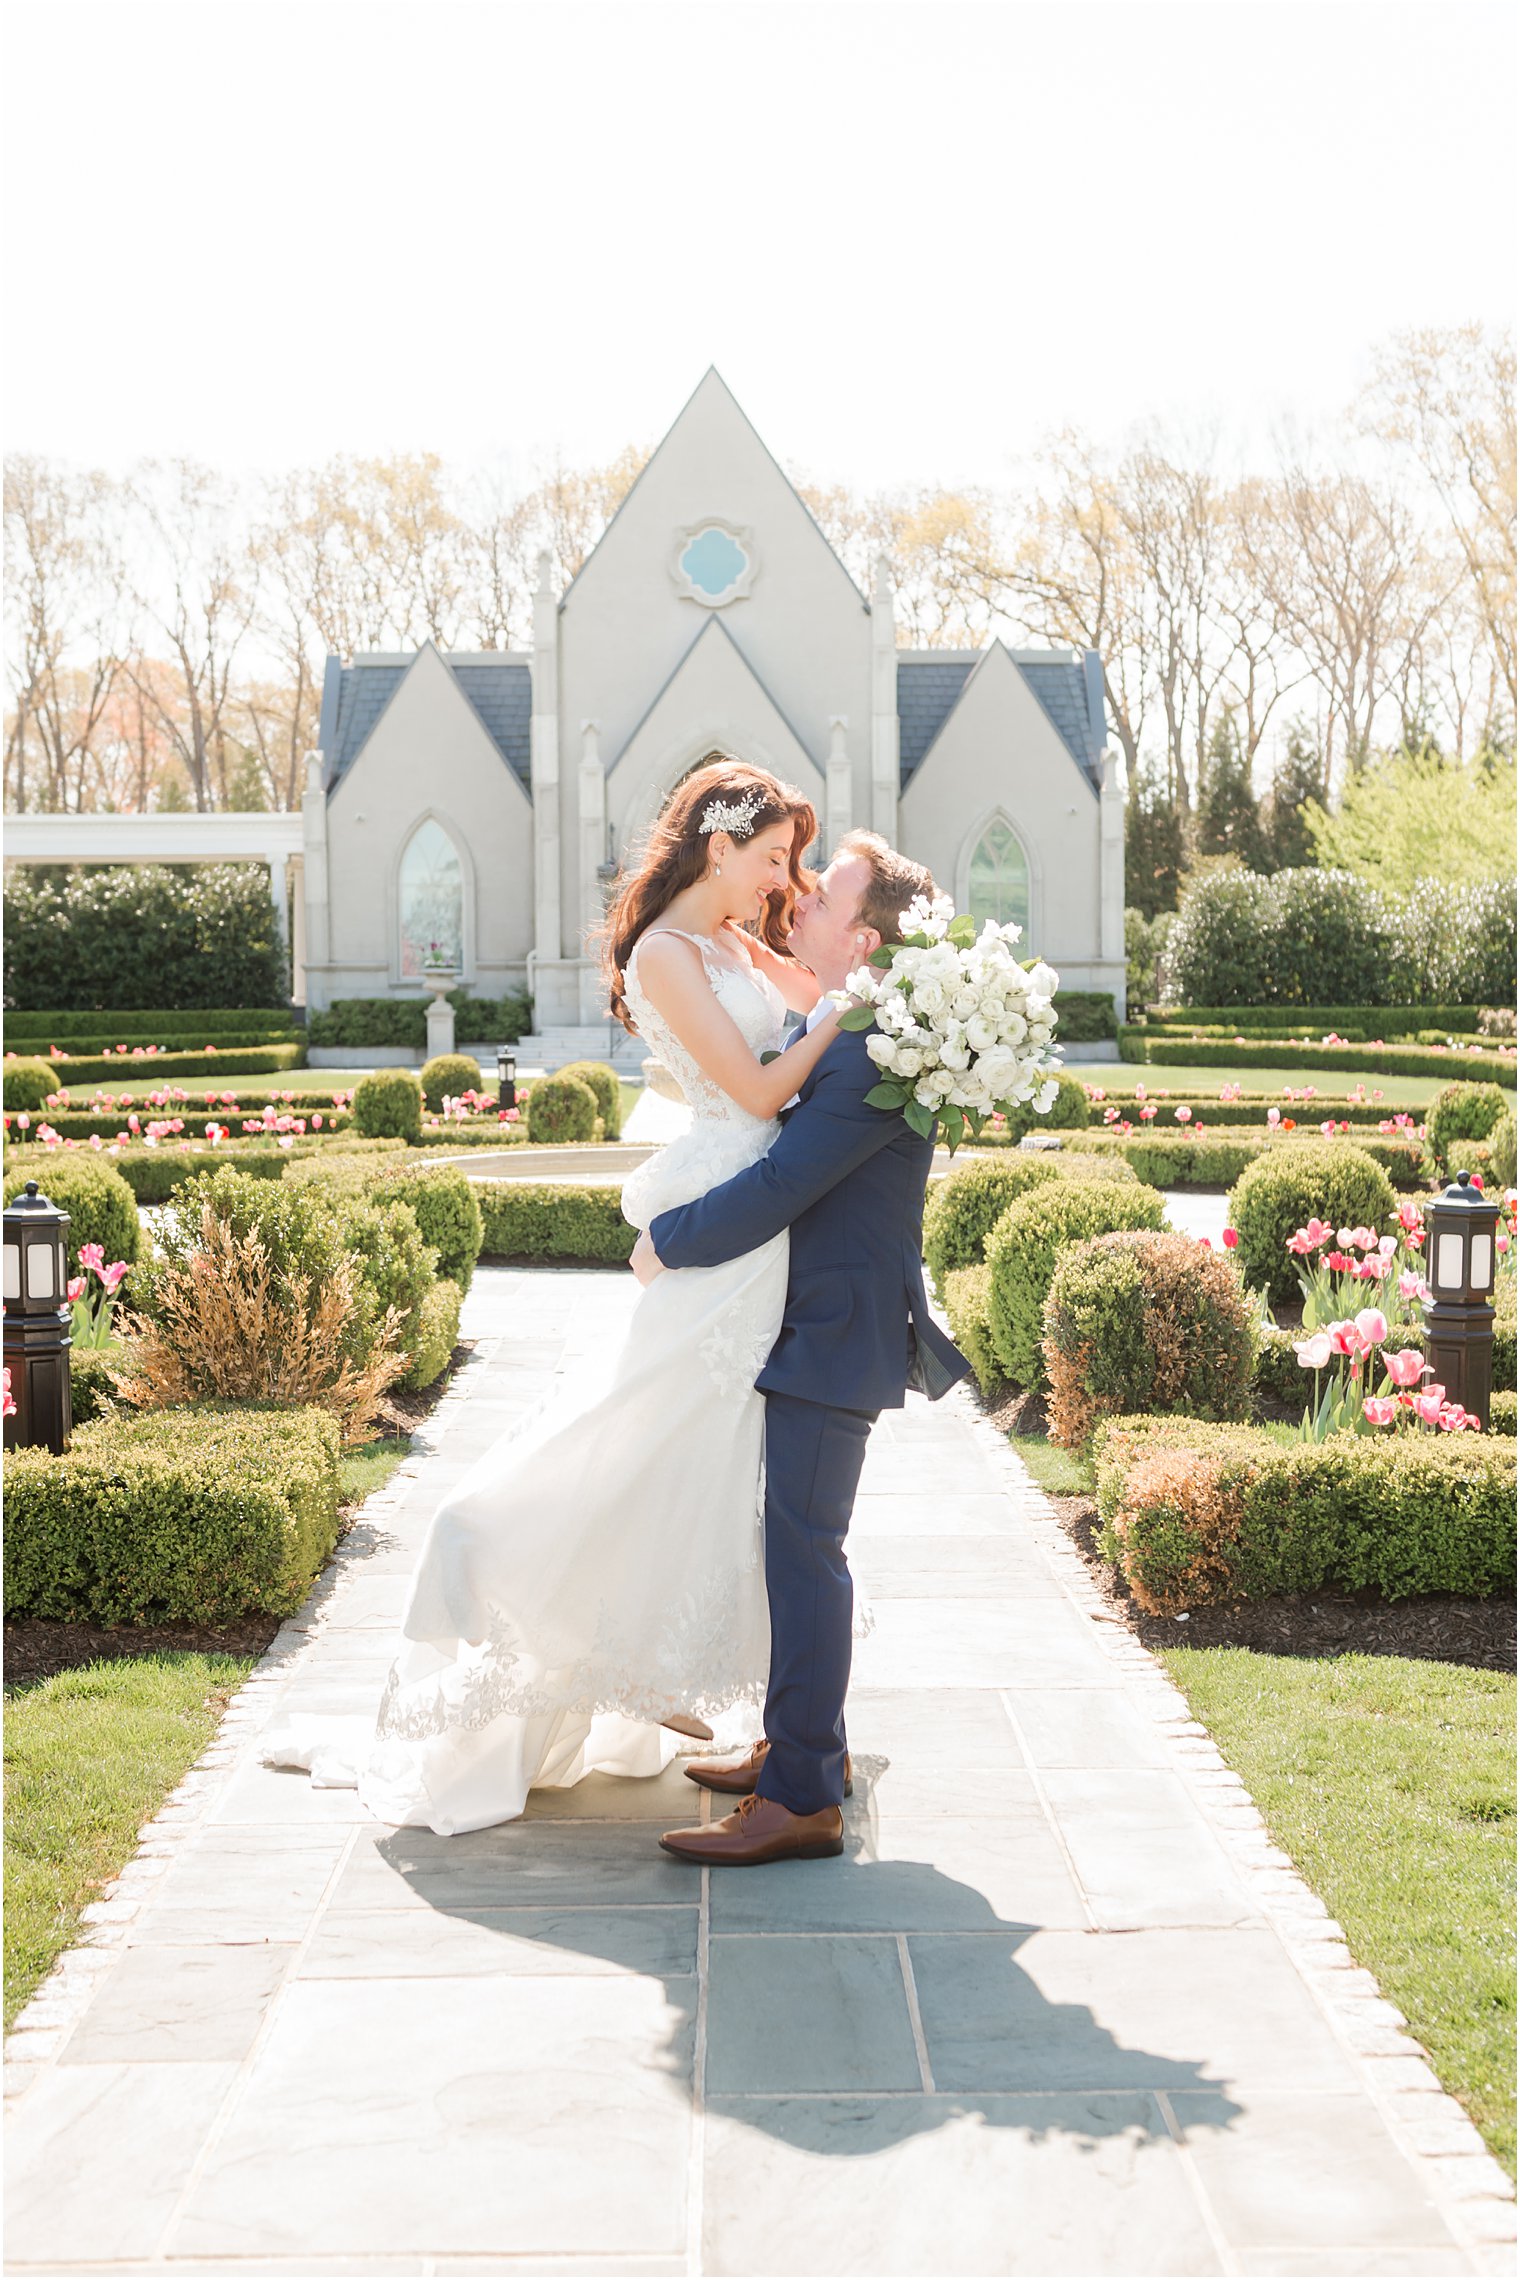 groom lifts bride during spring wedding portraits in New Jersey garden